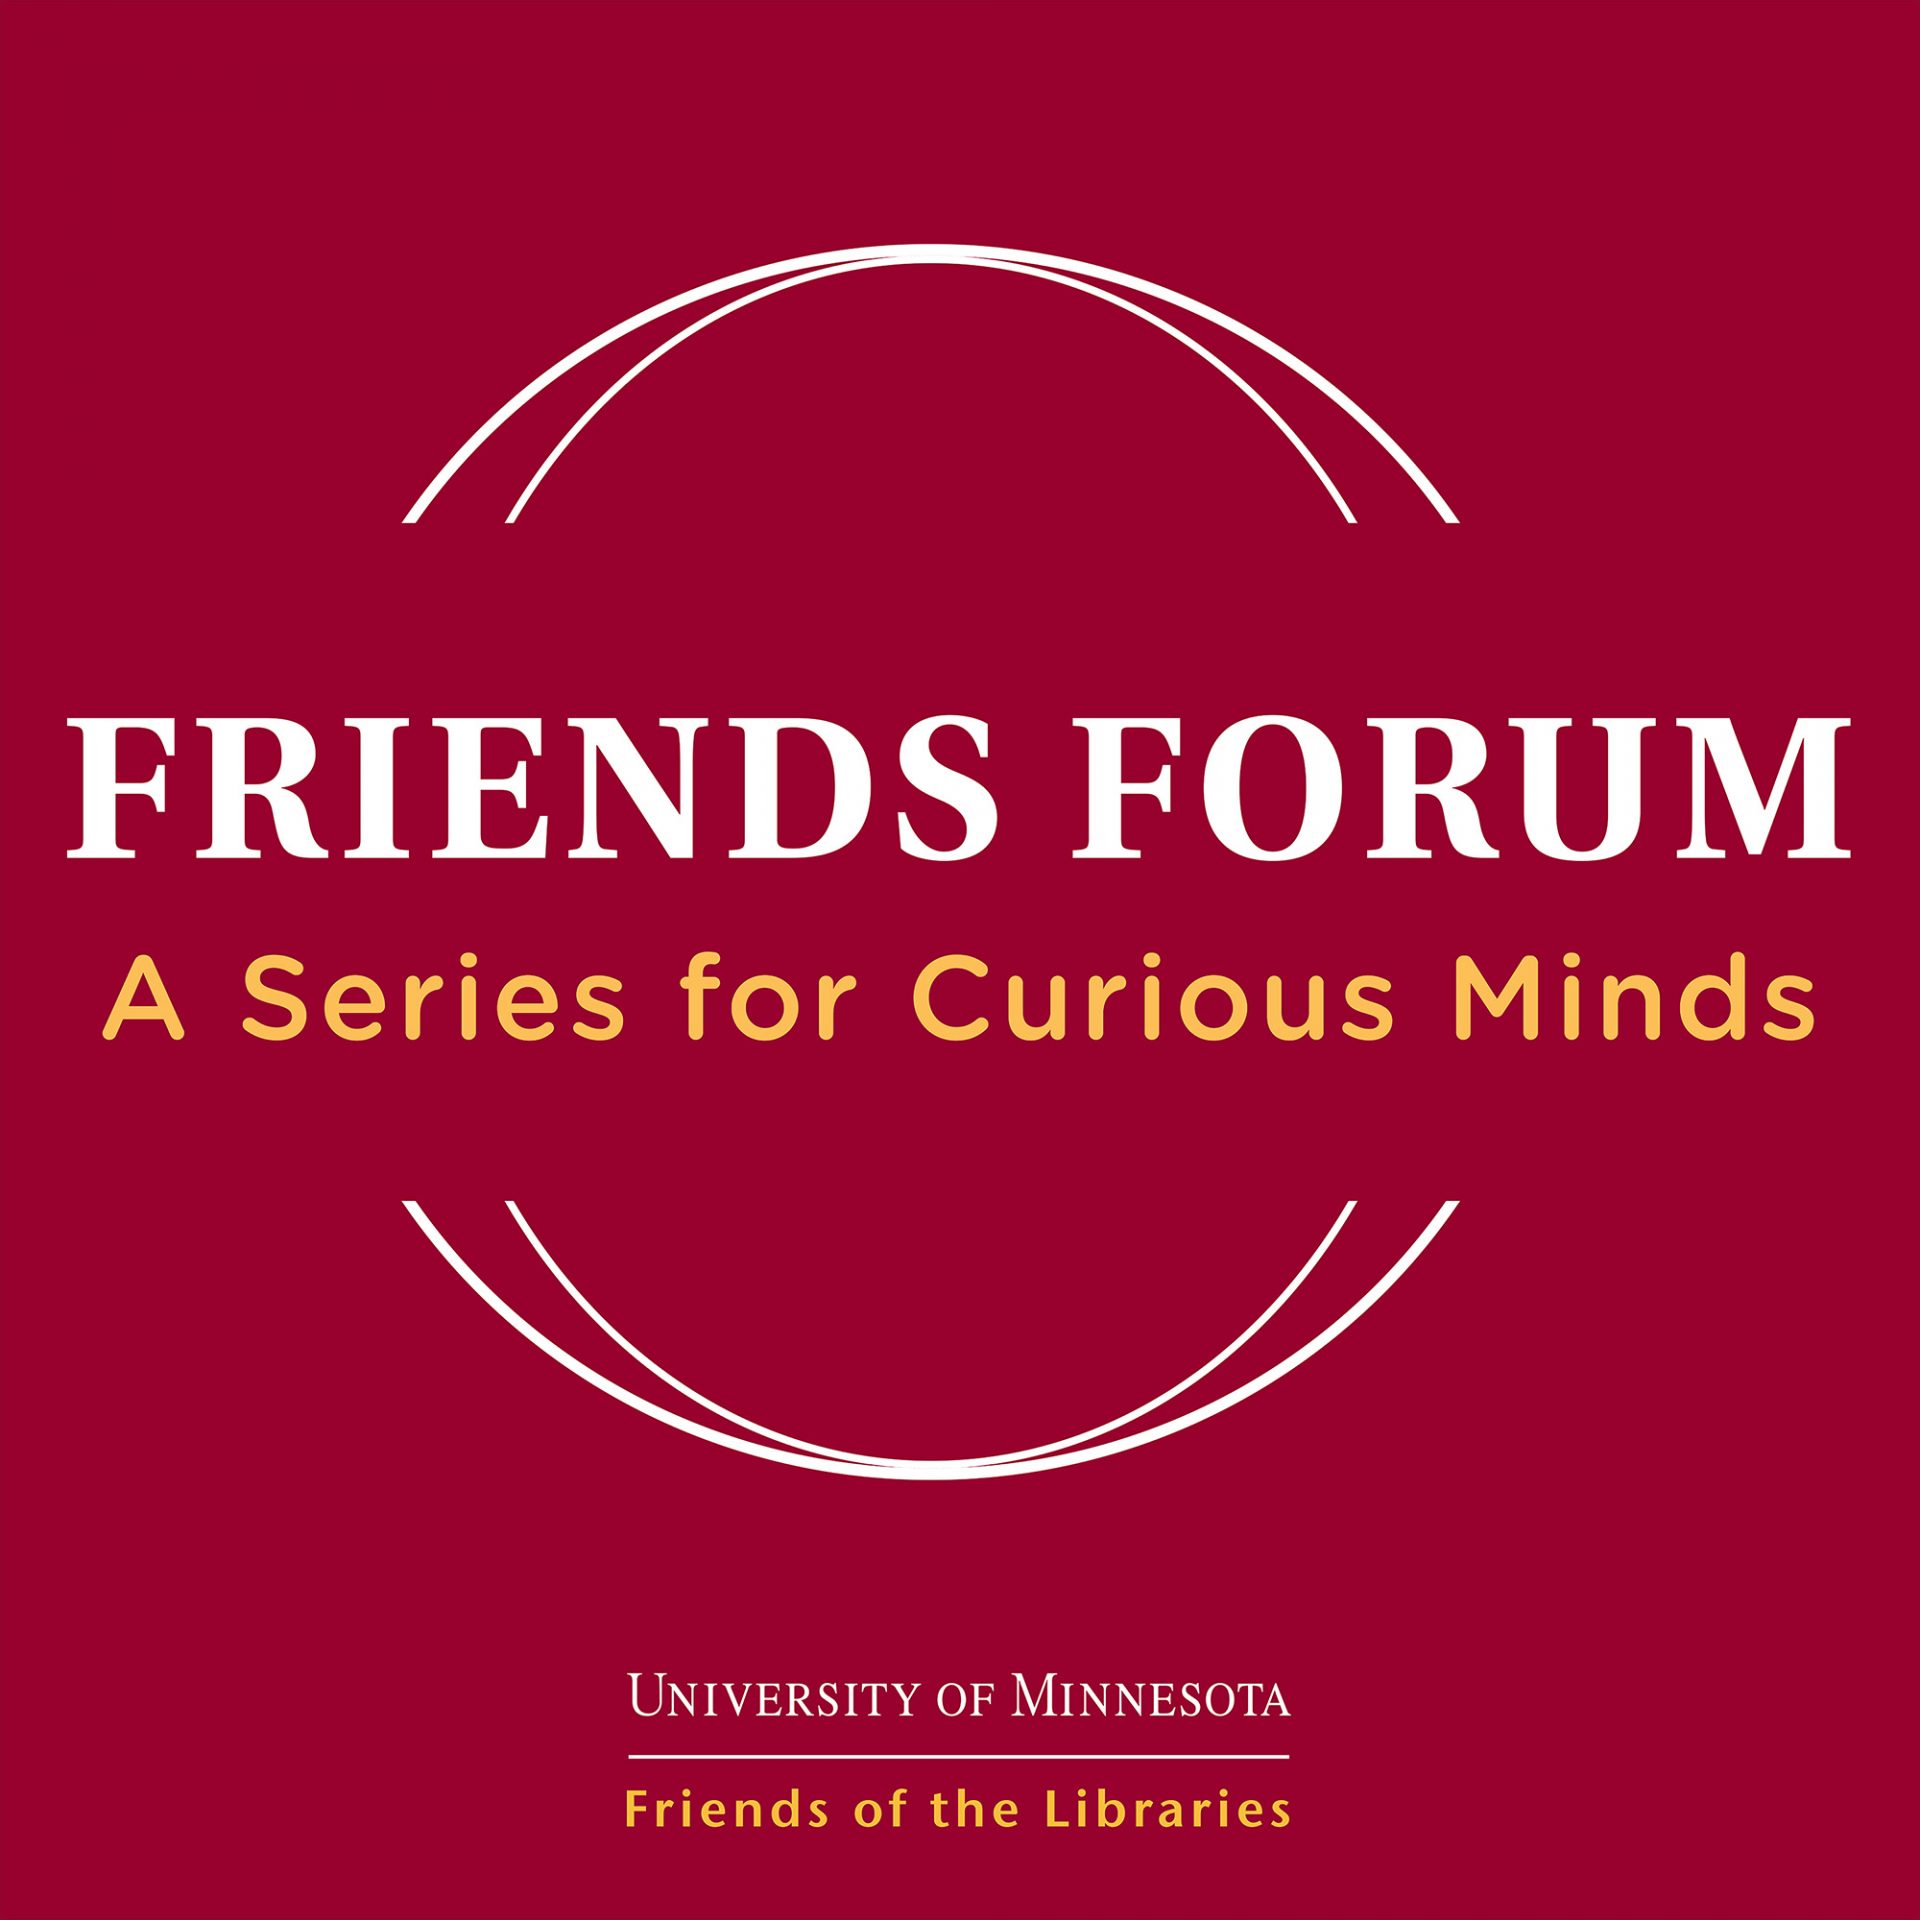 Friends Forum: A Series for Curious Minds